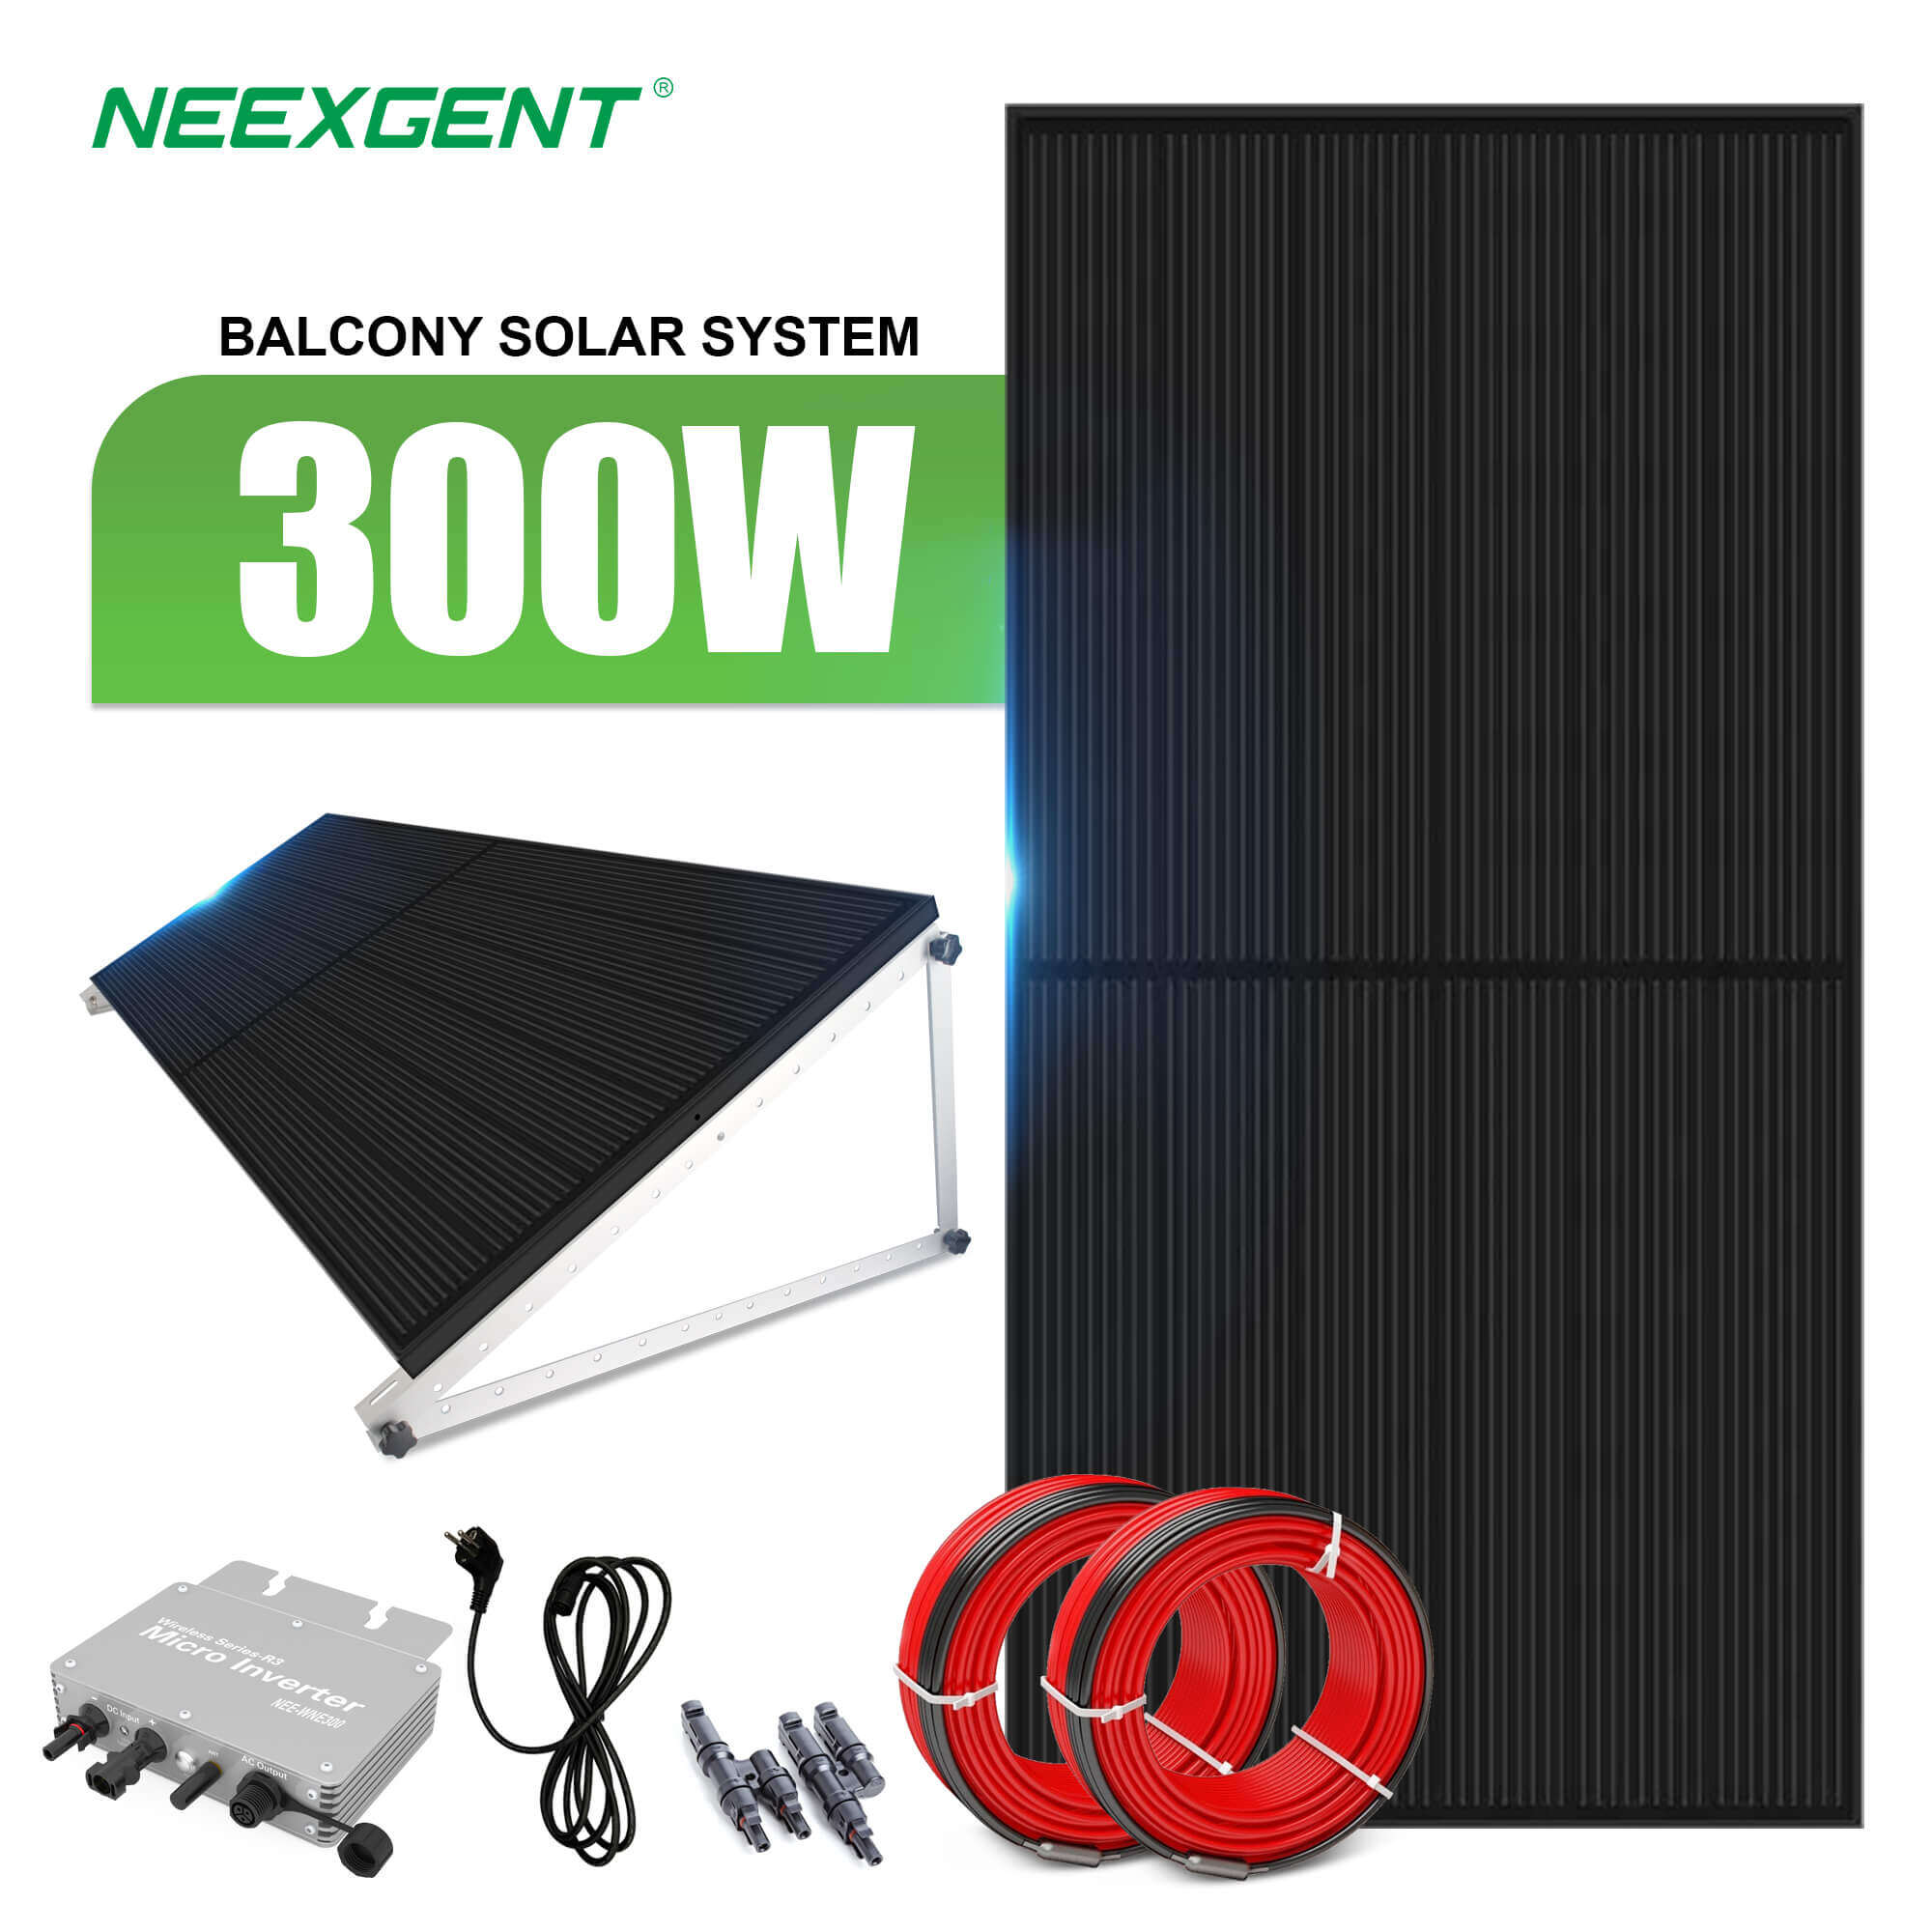 Neexgent 300w Micro Inverter On Grid Solar Panel System Kit For Balcony Courtyard Garden